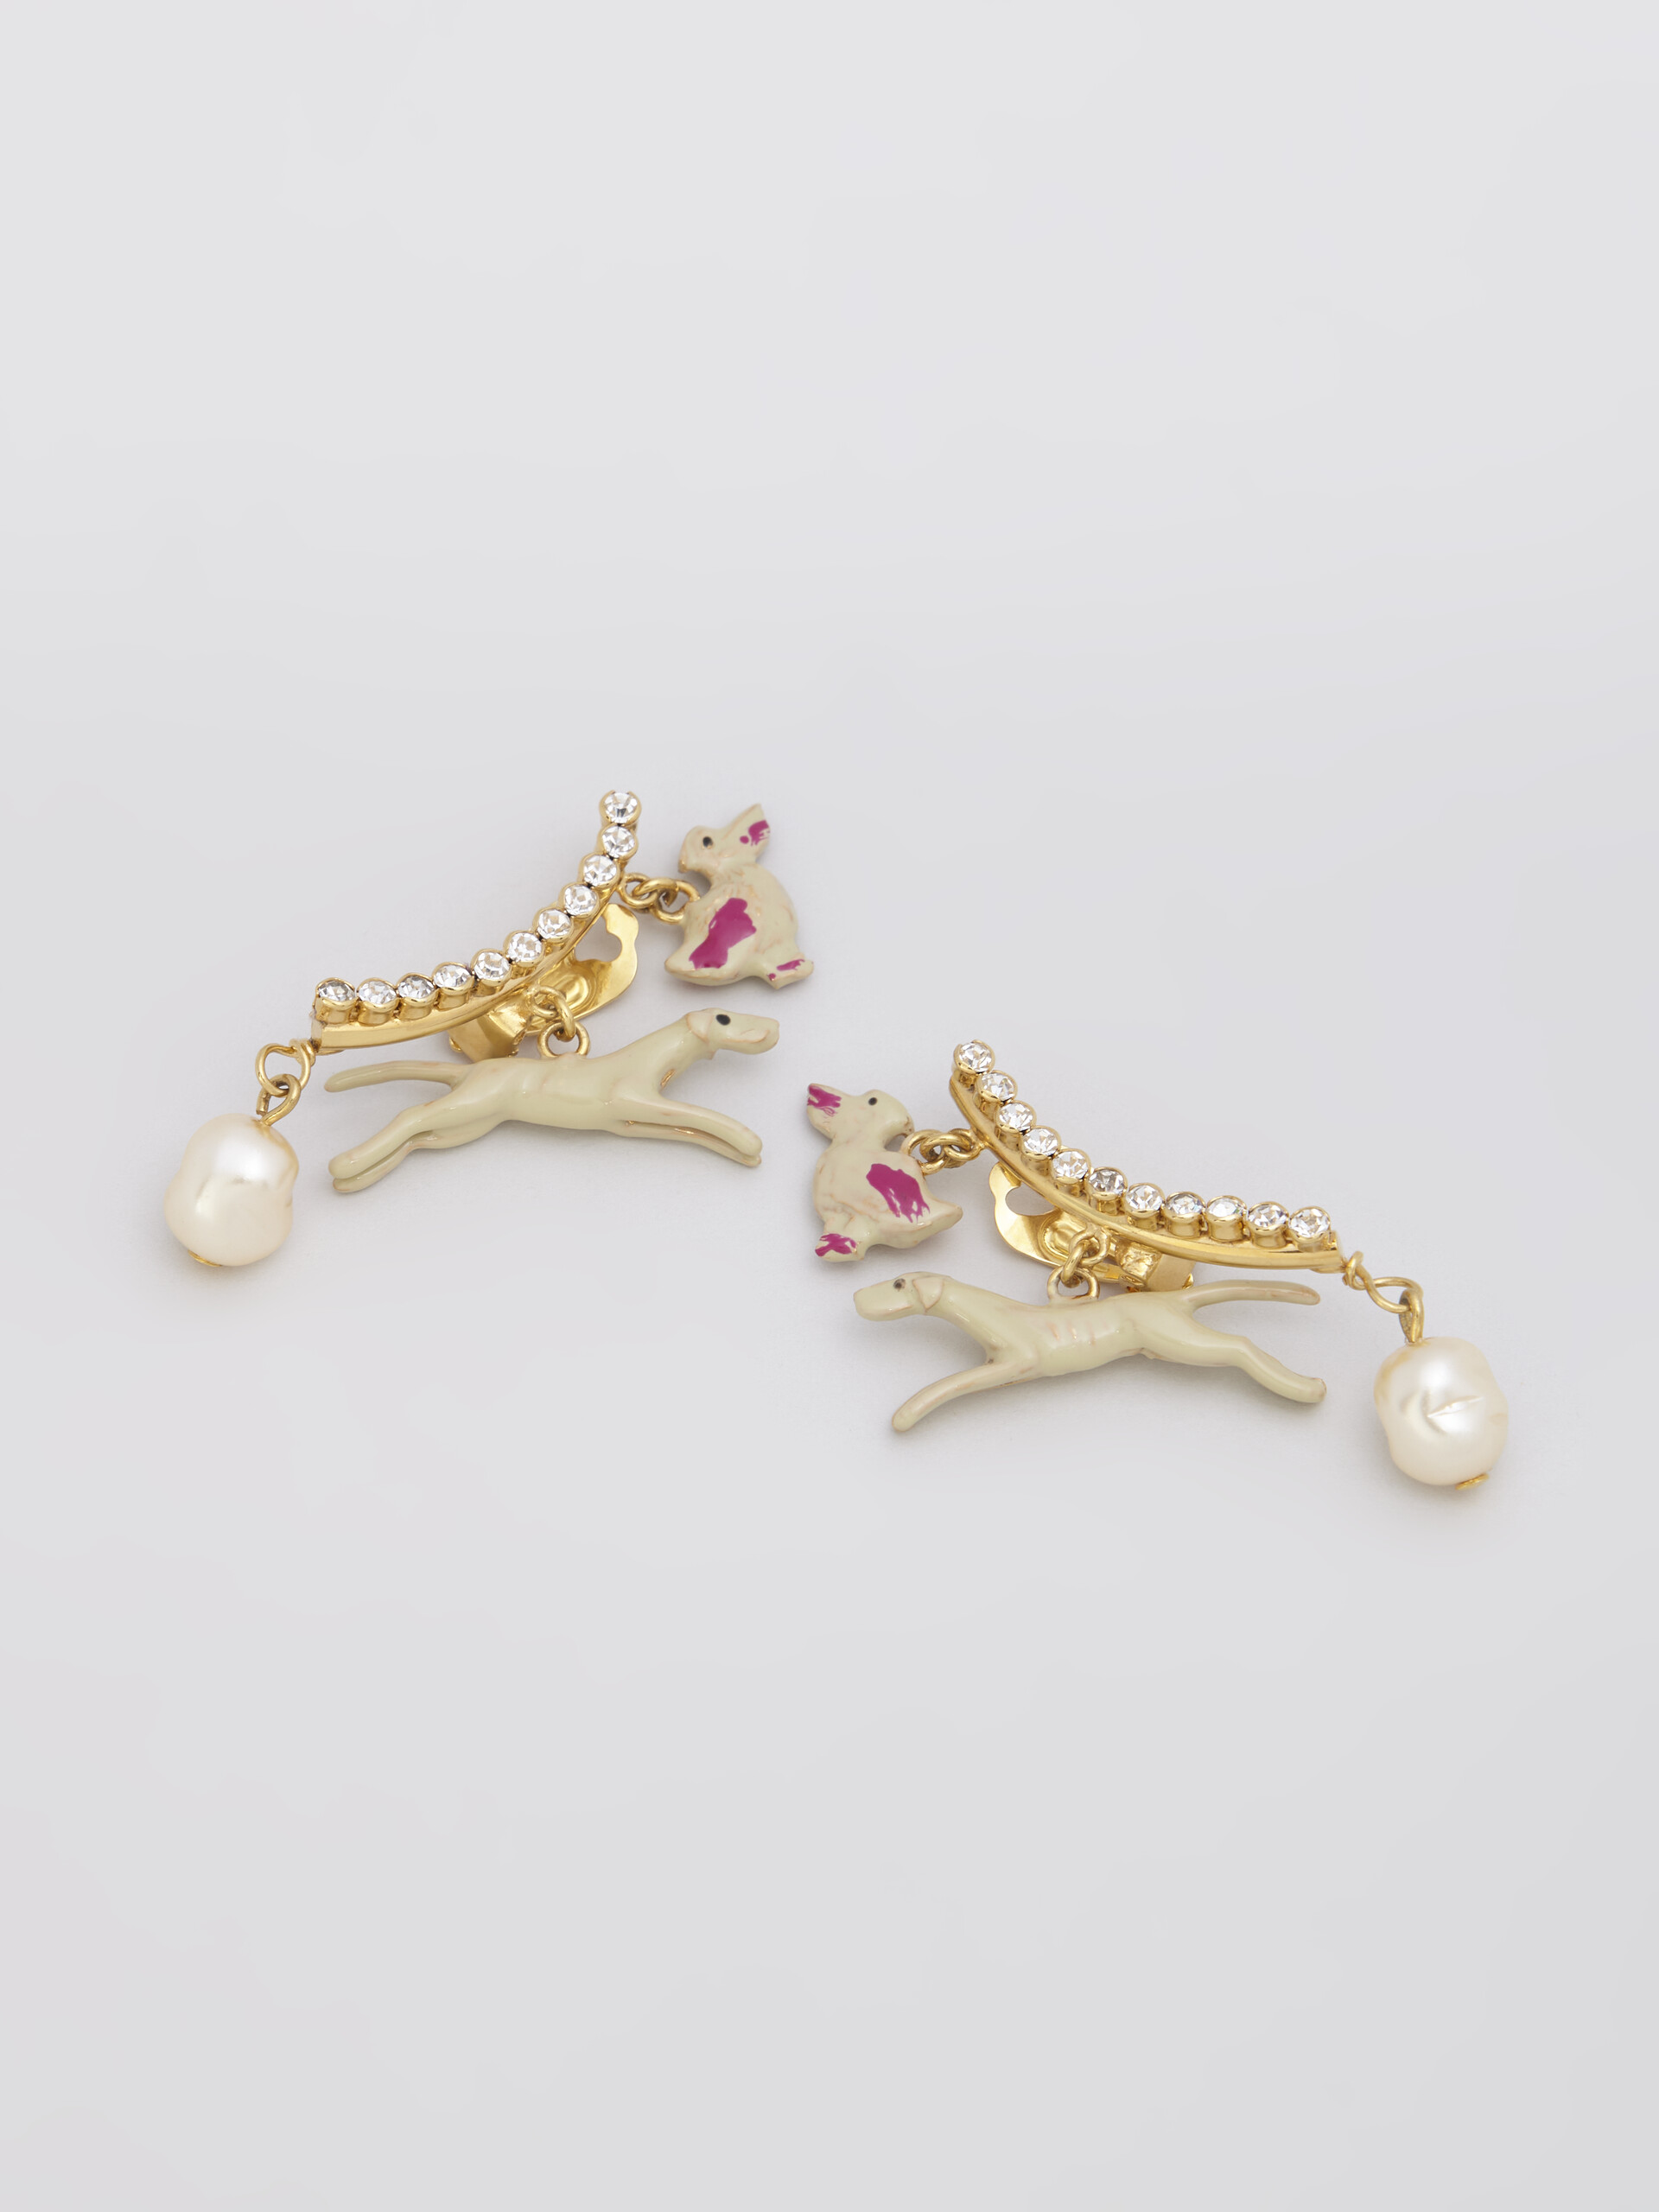 Brass FOUND TREASURES greyhound earrings - Earrings - Image 4